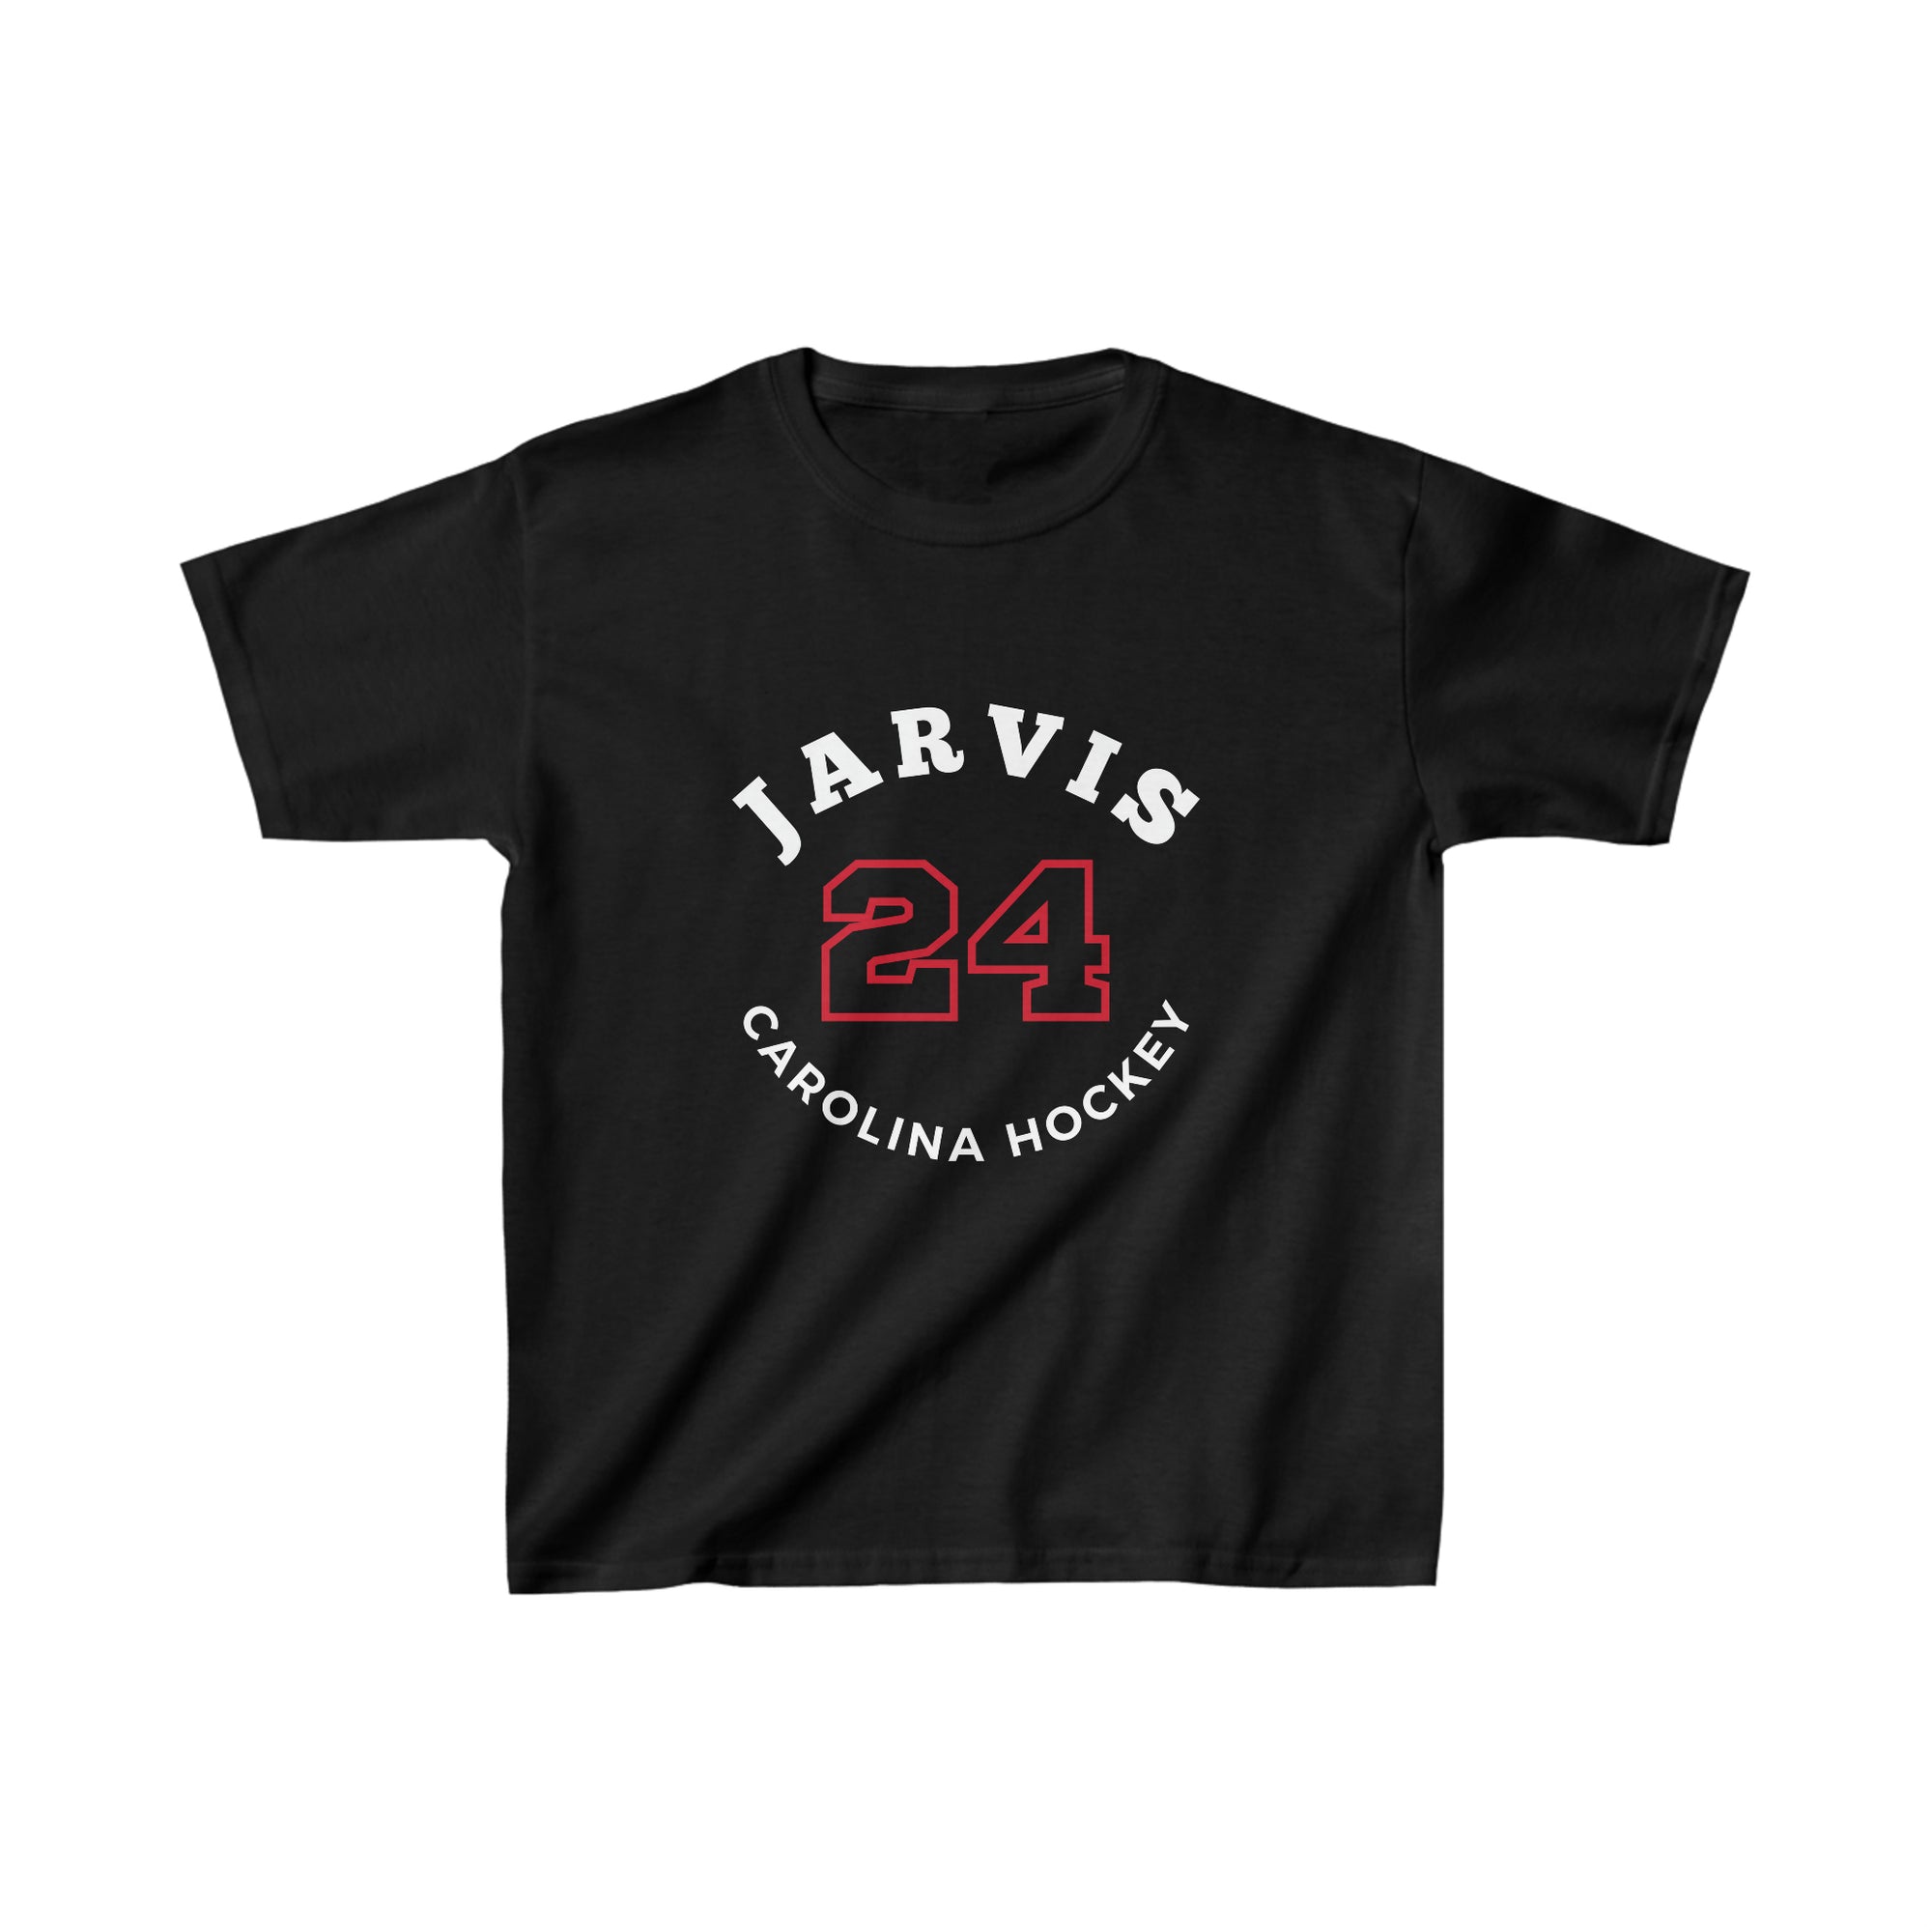 Jarvis 24 Carolina Hockey Number Arch Design Kids Tee